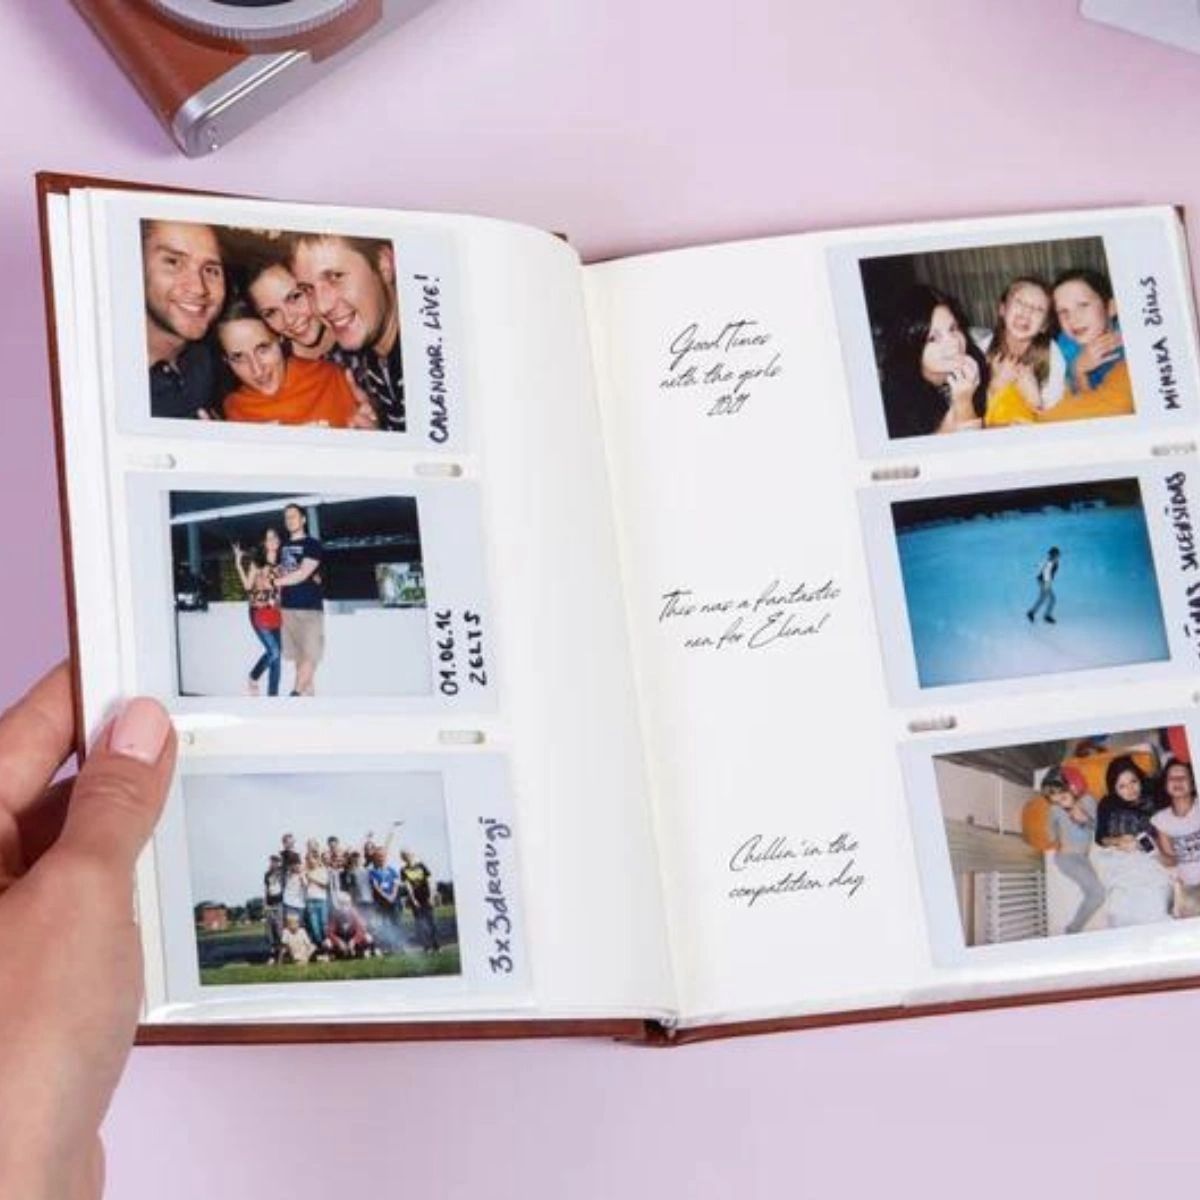 Polaroid Slike kao Poklon? Personalizovani Pokloni su Najbolji!